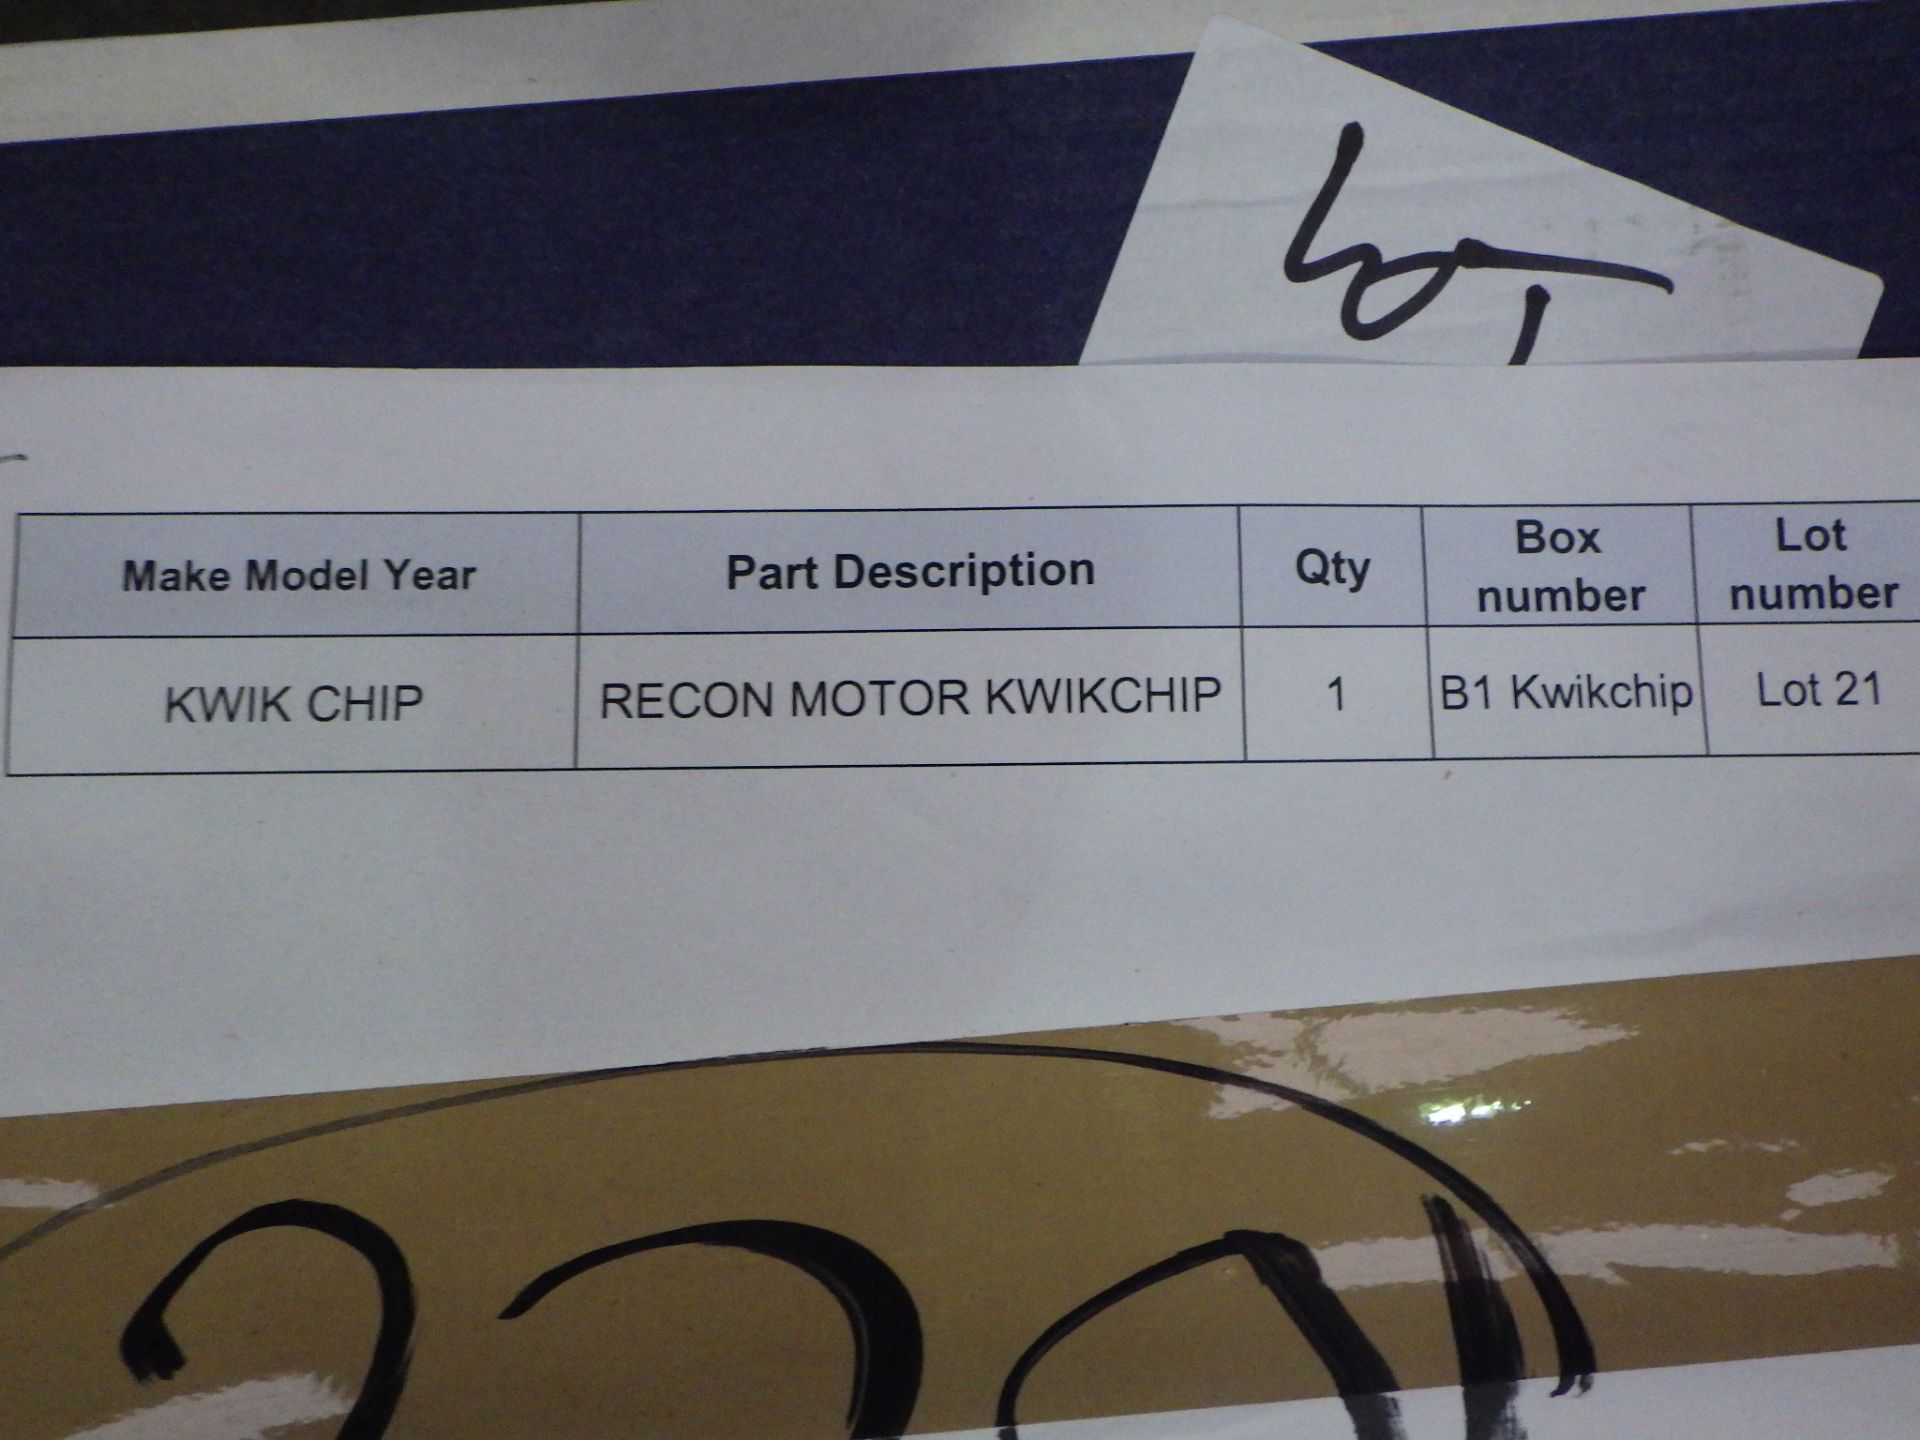 Kwik chip recon motor - Image 2 of 3